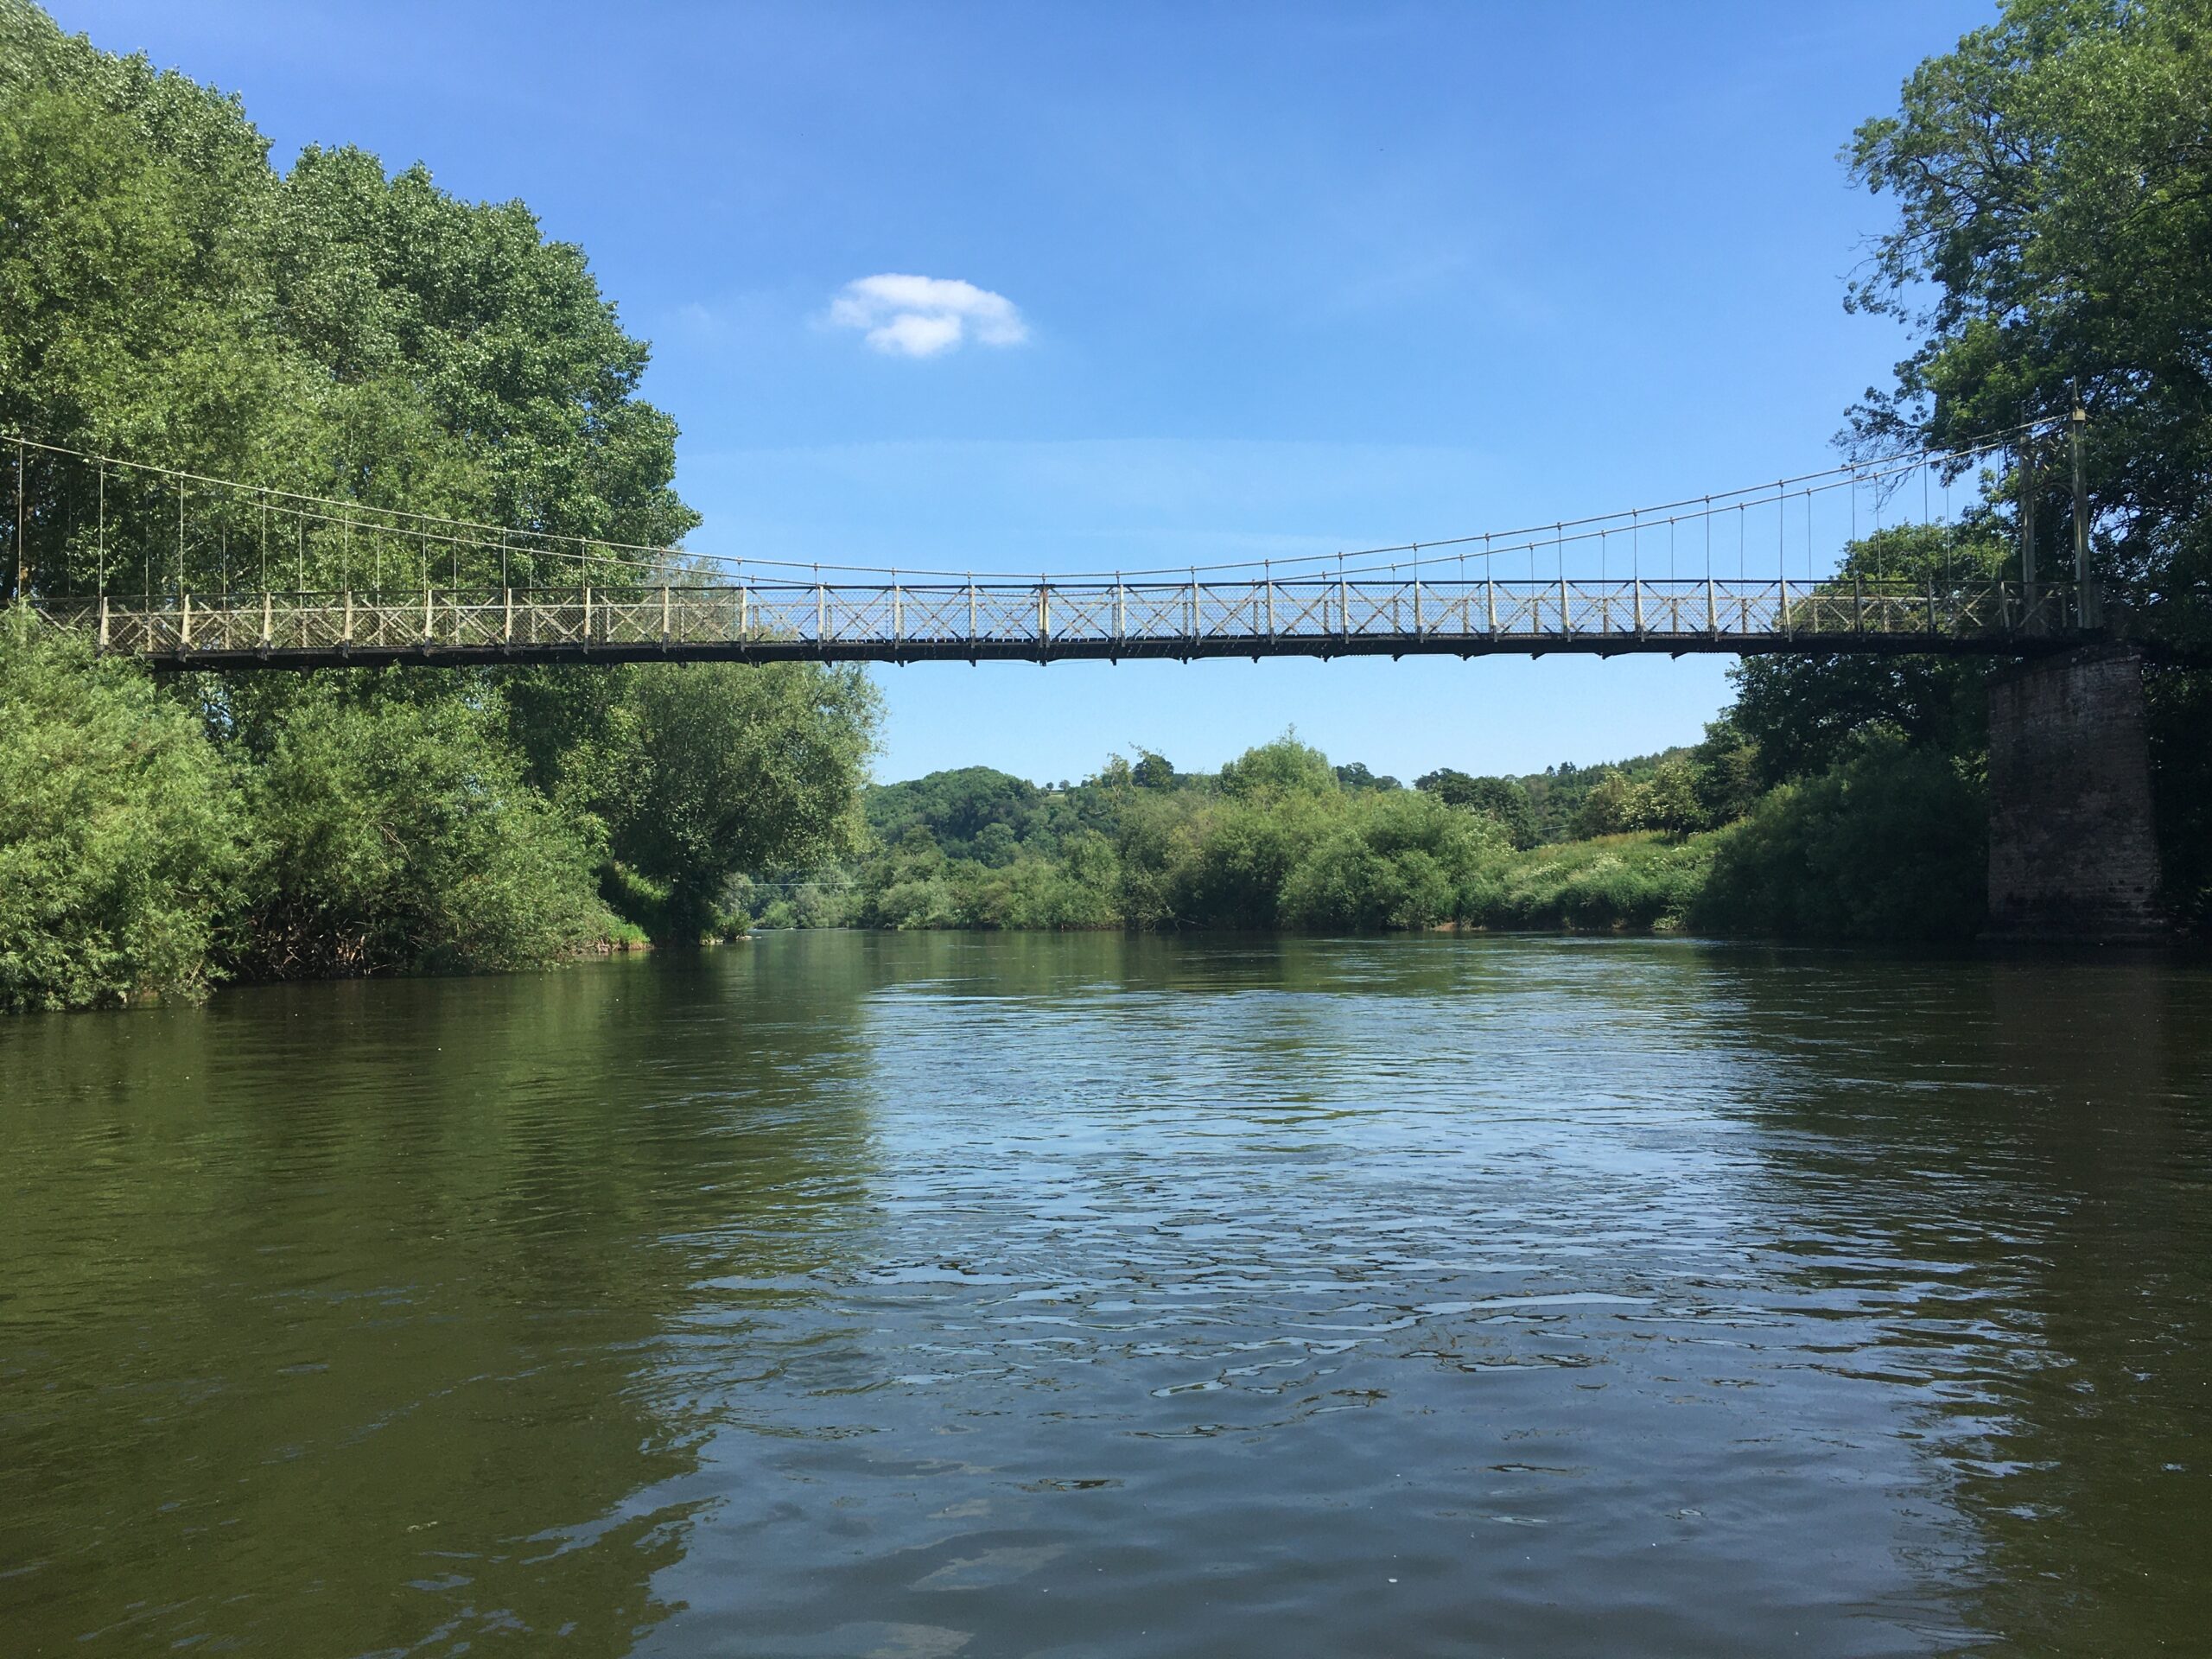 River Wye through Hereford